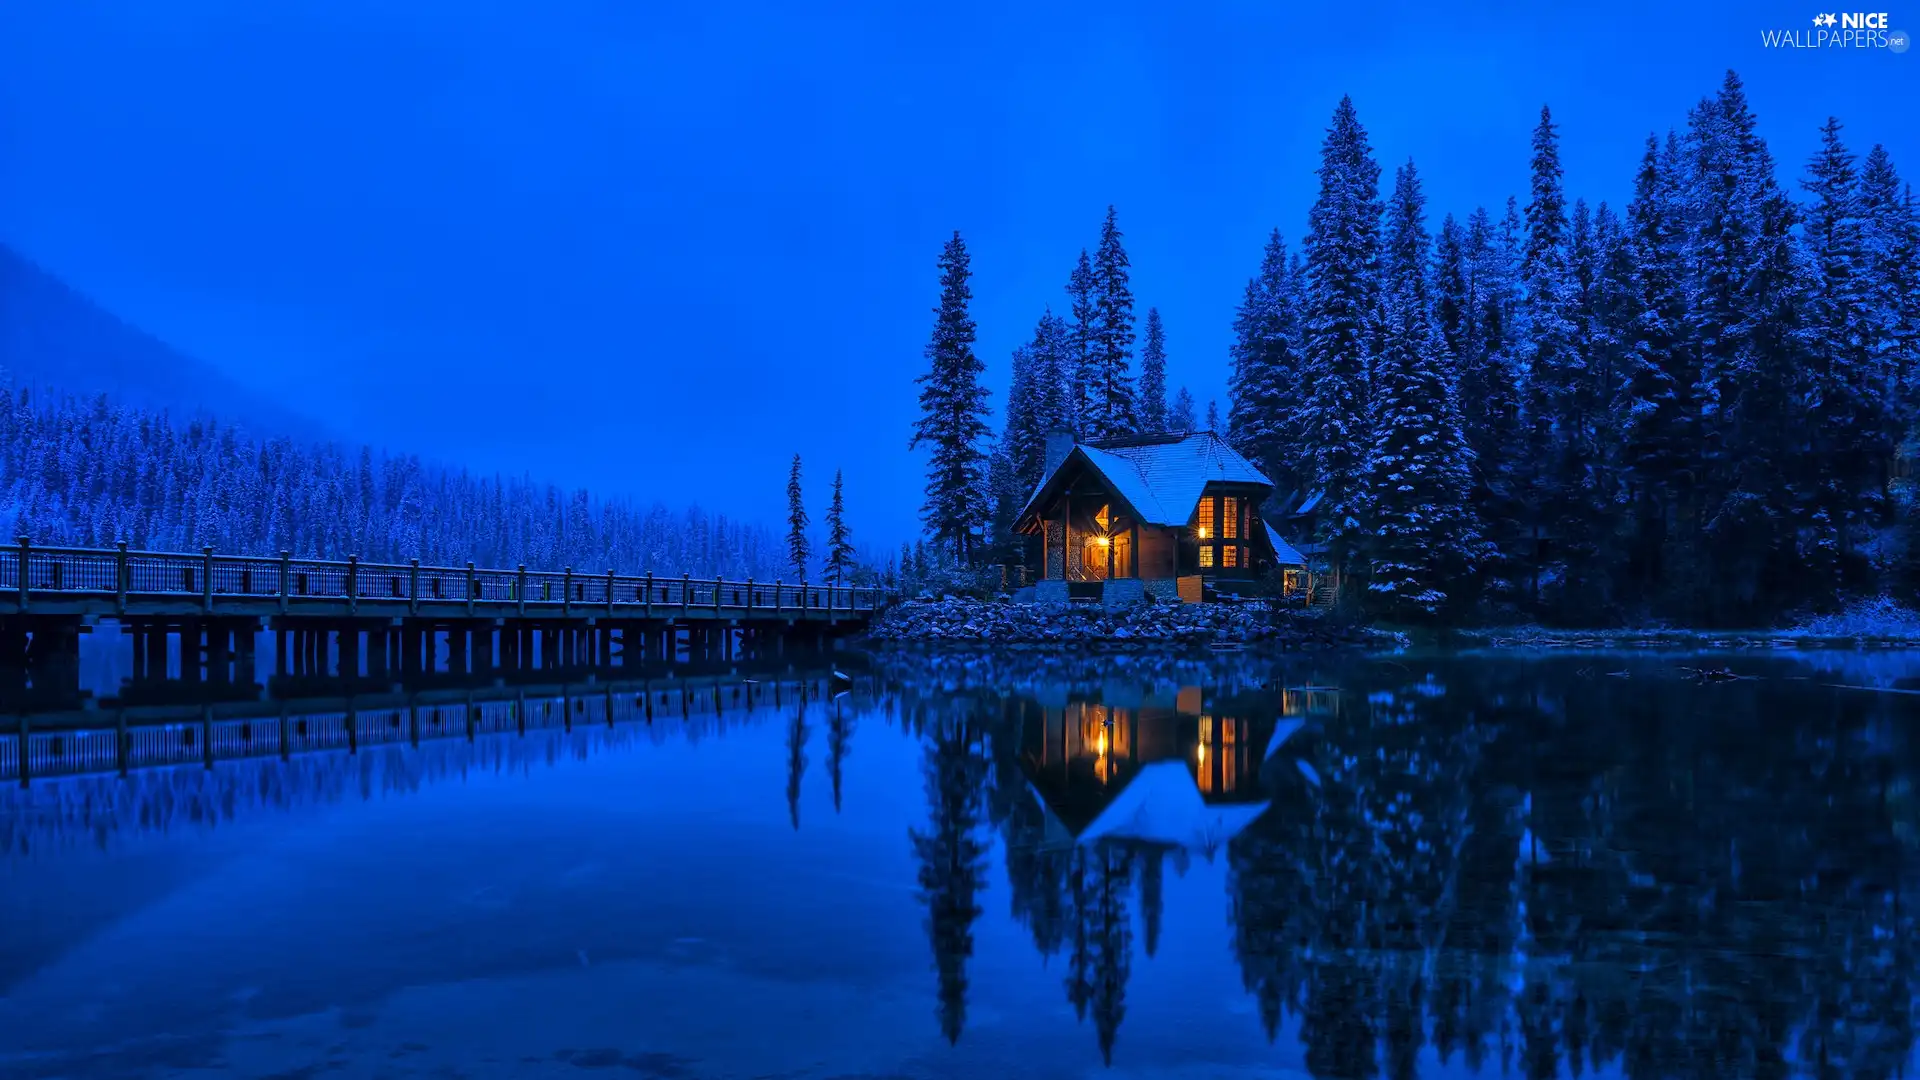 trees, forest, viewes, Floodlit, house, Province of British Columbia, Mountains, Yoho National Park, Canada, bridge, Emerald Lake, lake